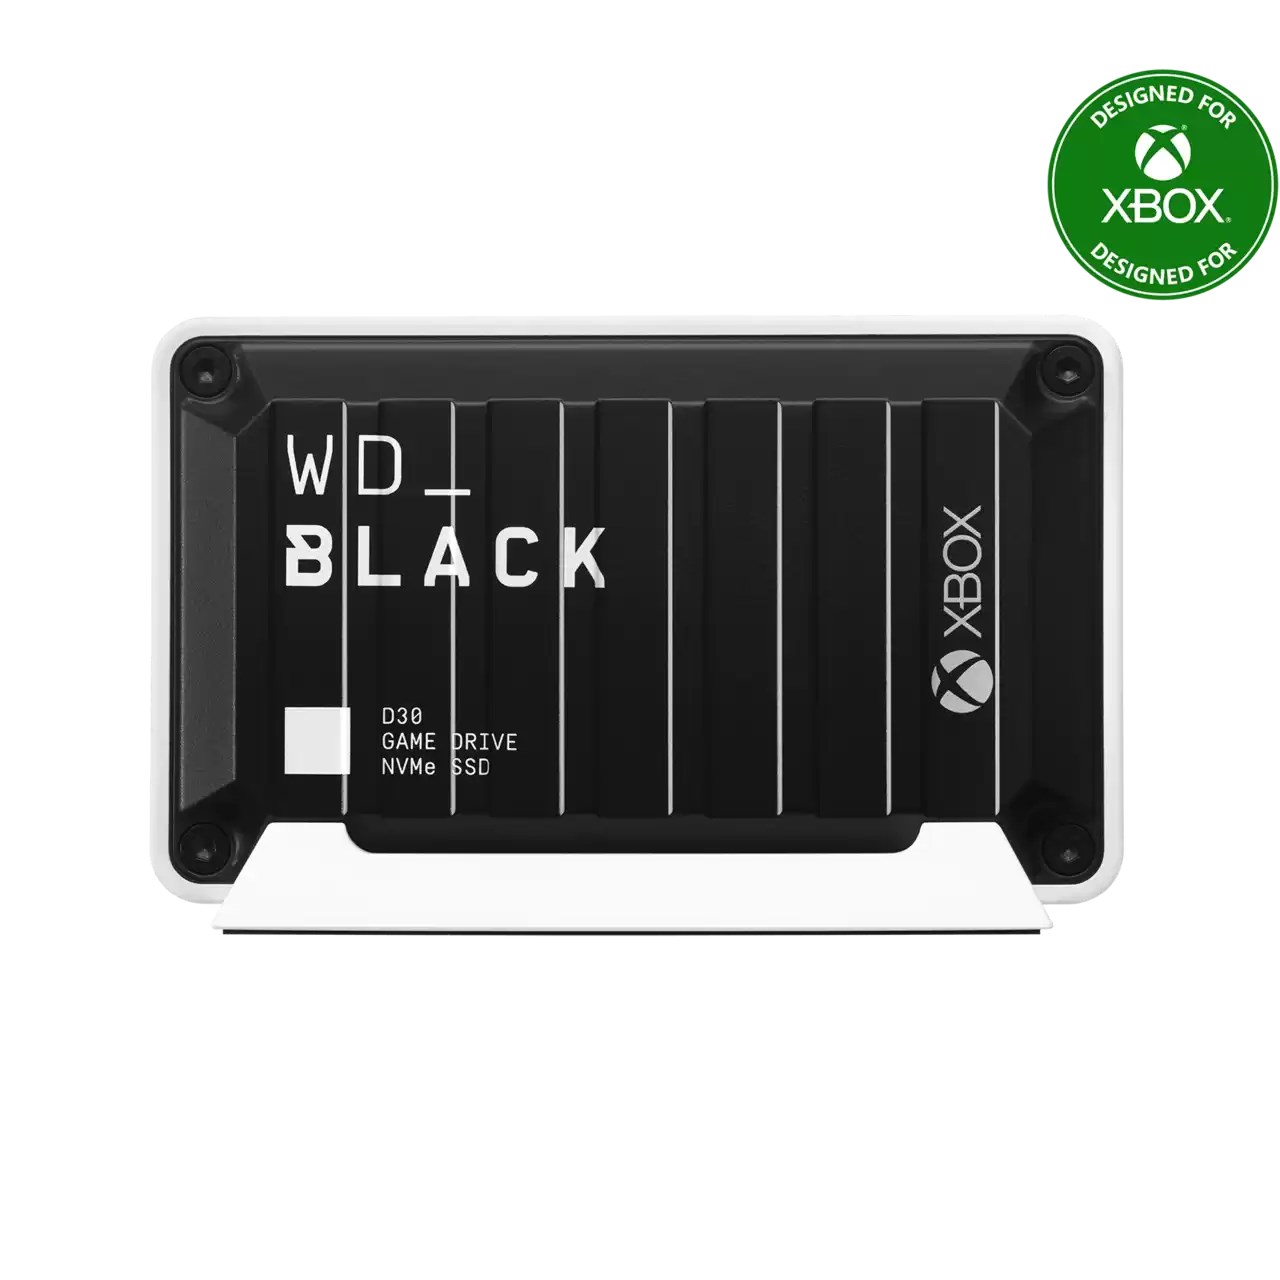 SanDisk externí SSD 500GB WD BLACK D30 Game Drive pro Xbox0 